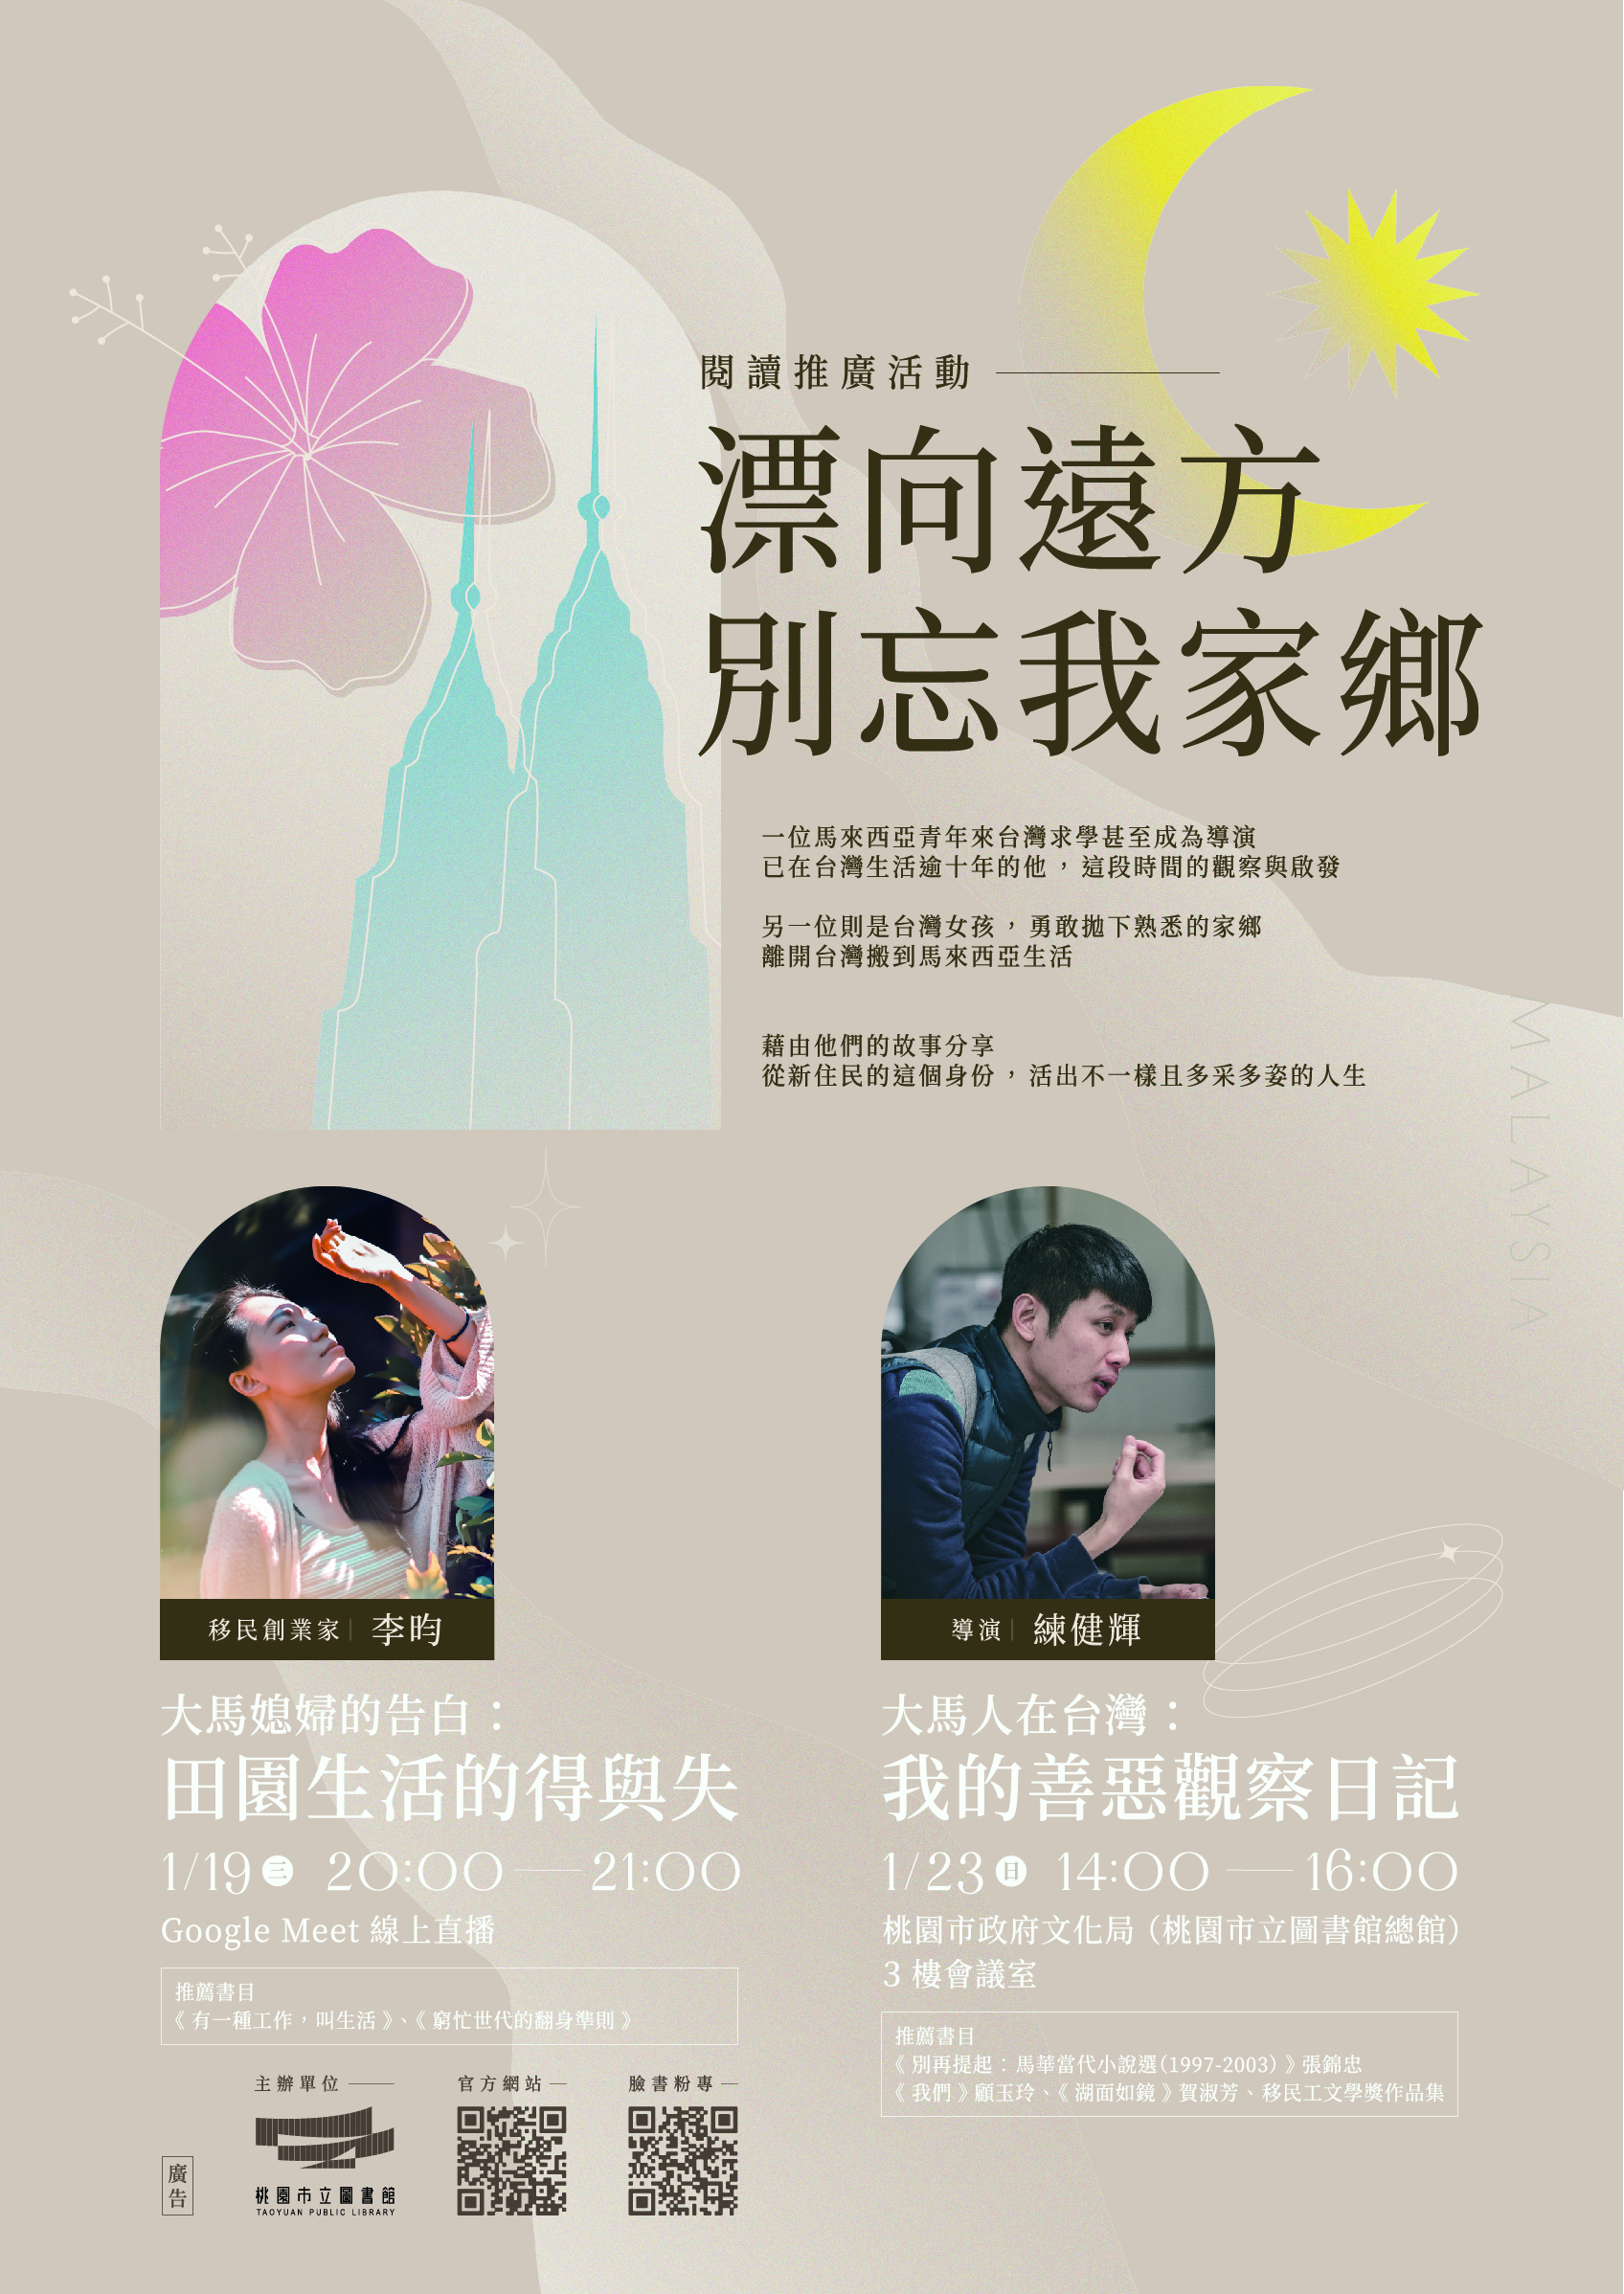 Kementerian Pendidikan berencana untuk membuka pendaftaran non-beasiswa bahasa mandarin pada 1 Maret. (Sumber: Perpustakaan Kota Taoyuan/桃園市立圖書館)